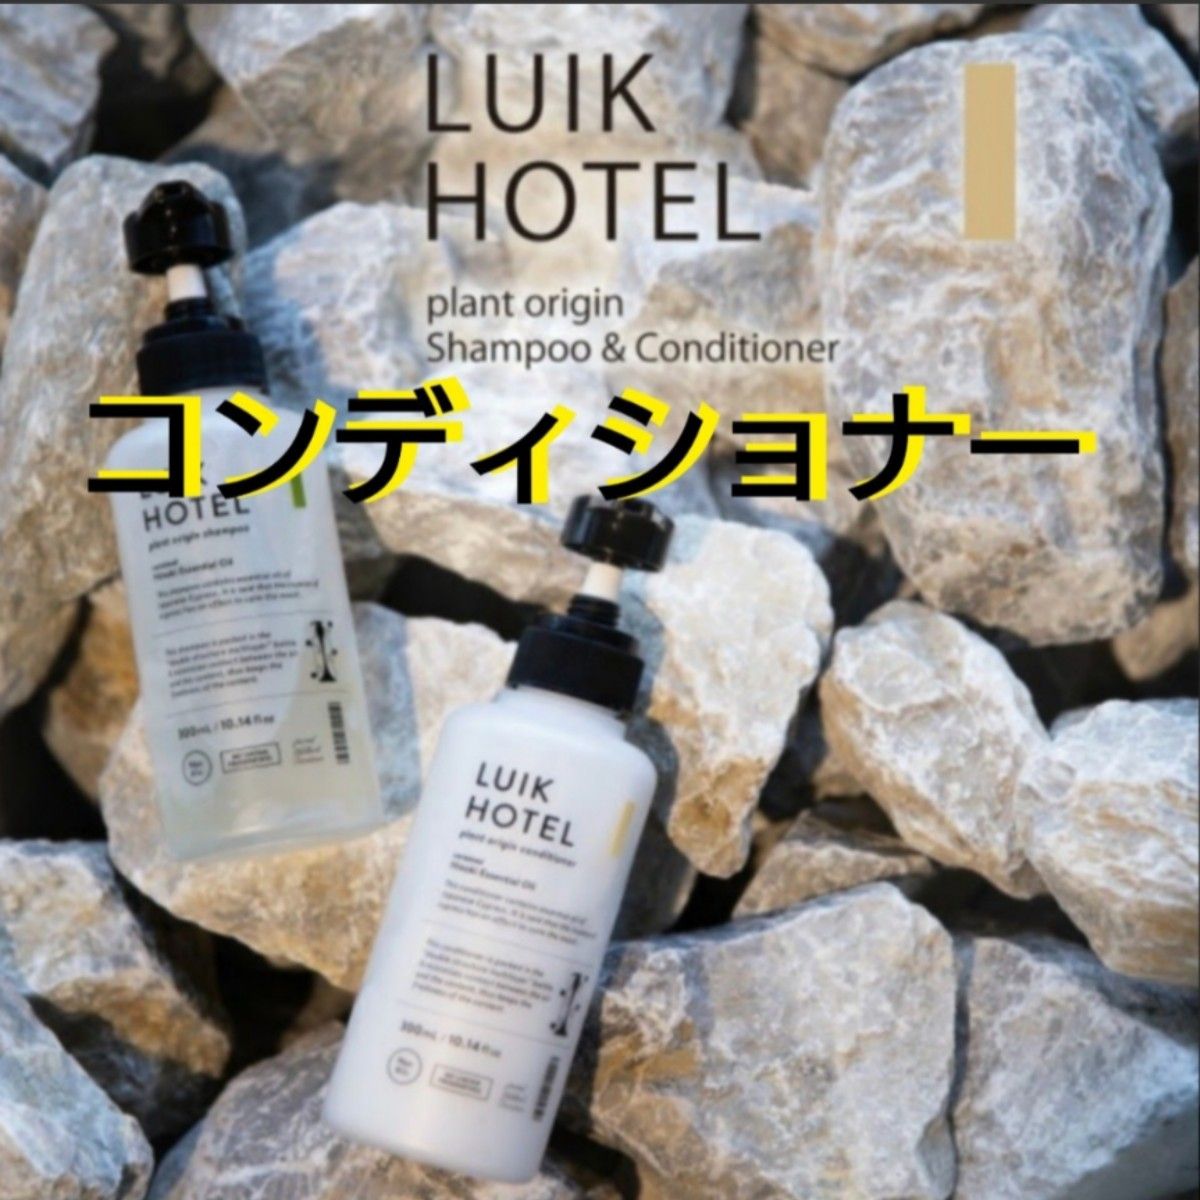 LUIK HOTEL コンディショナーノンシリコン （ヒノキ） 300ml